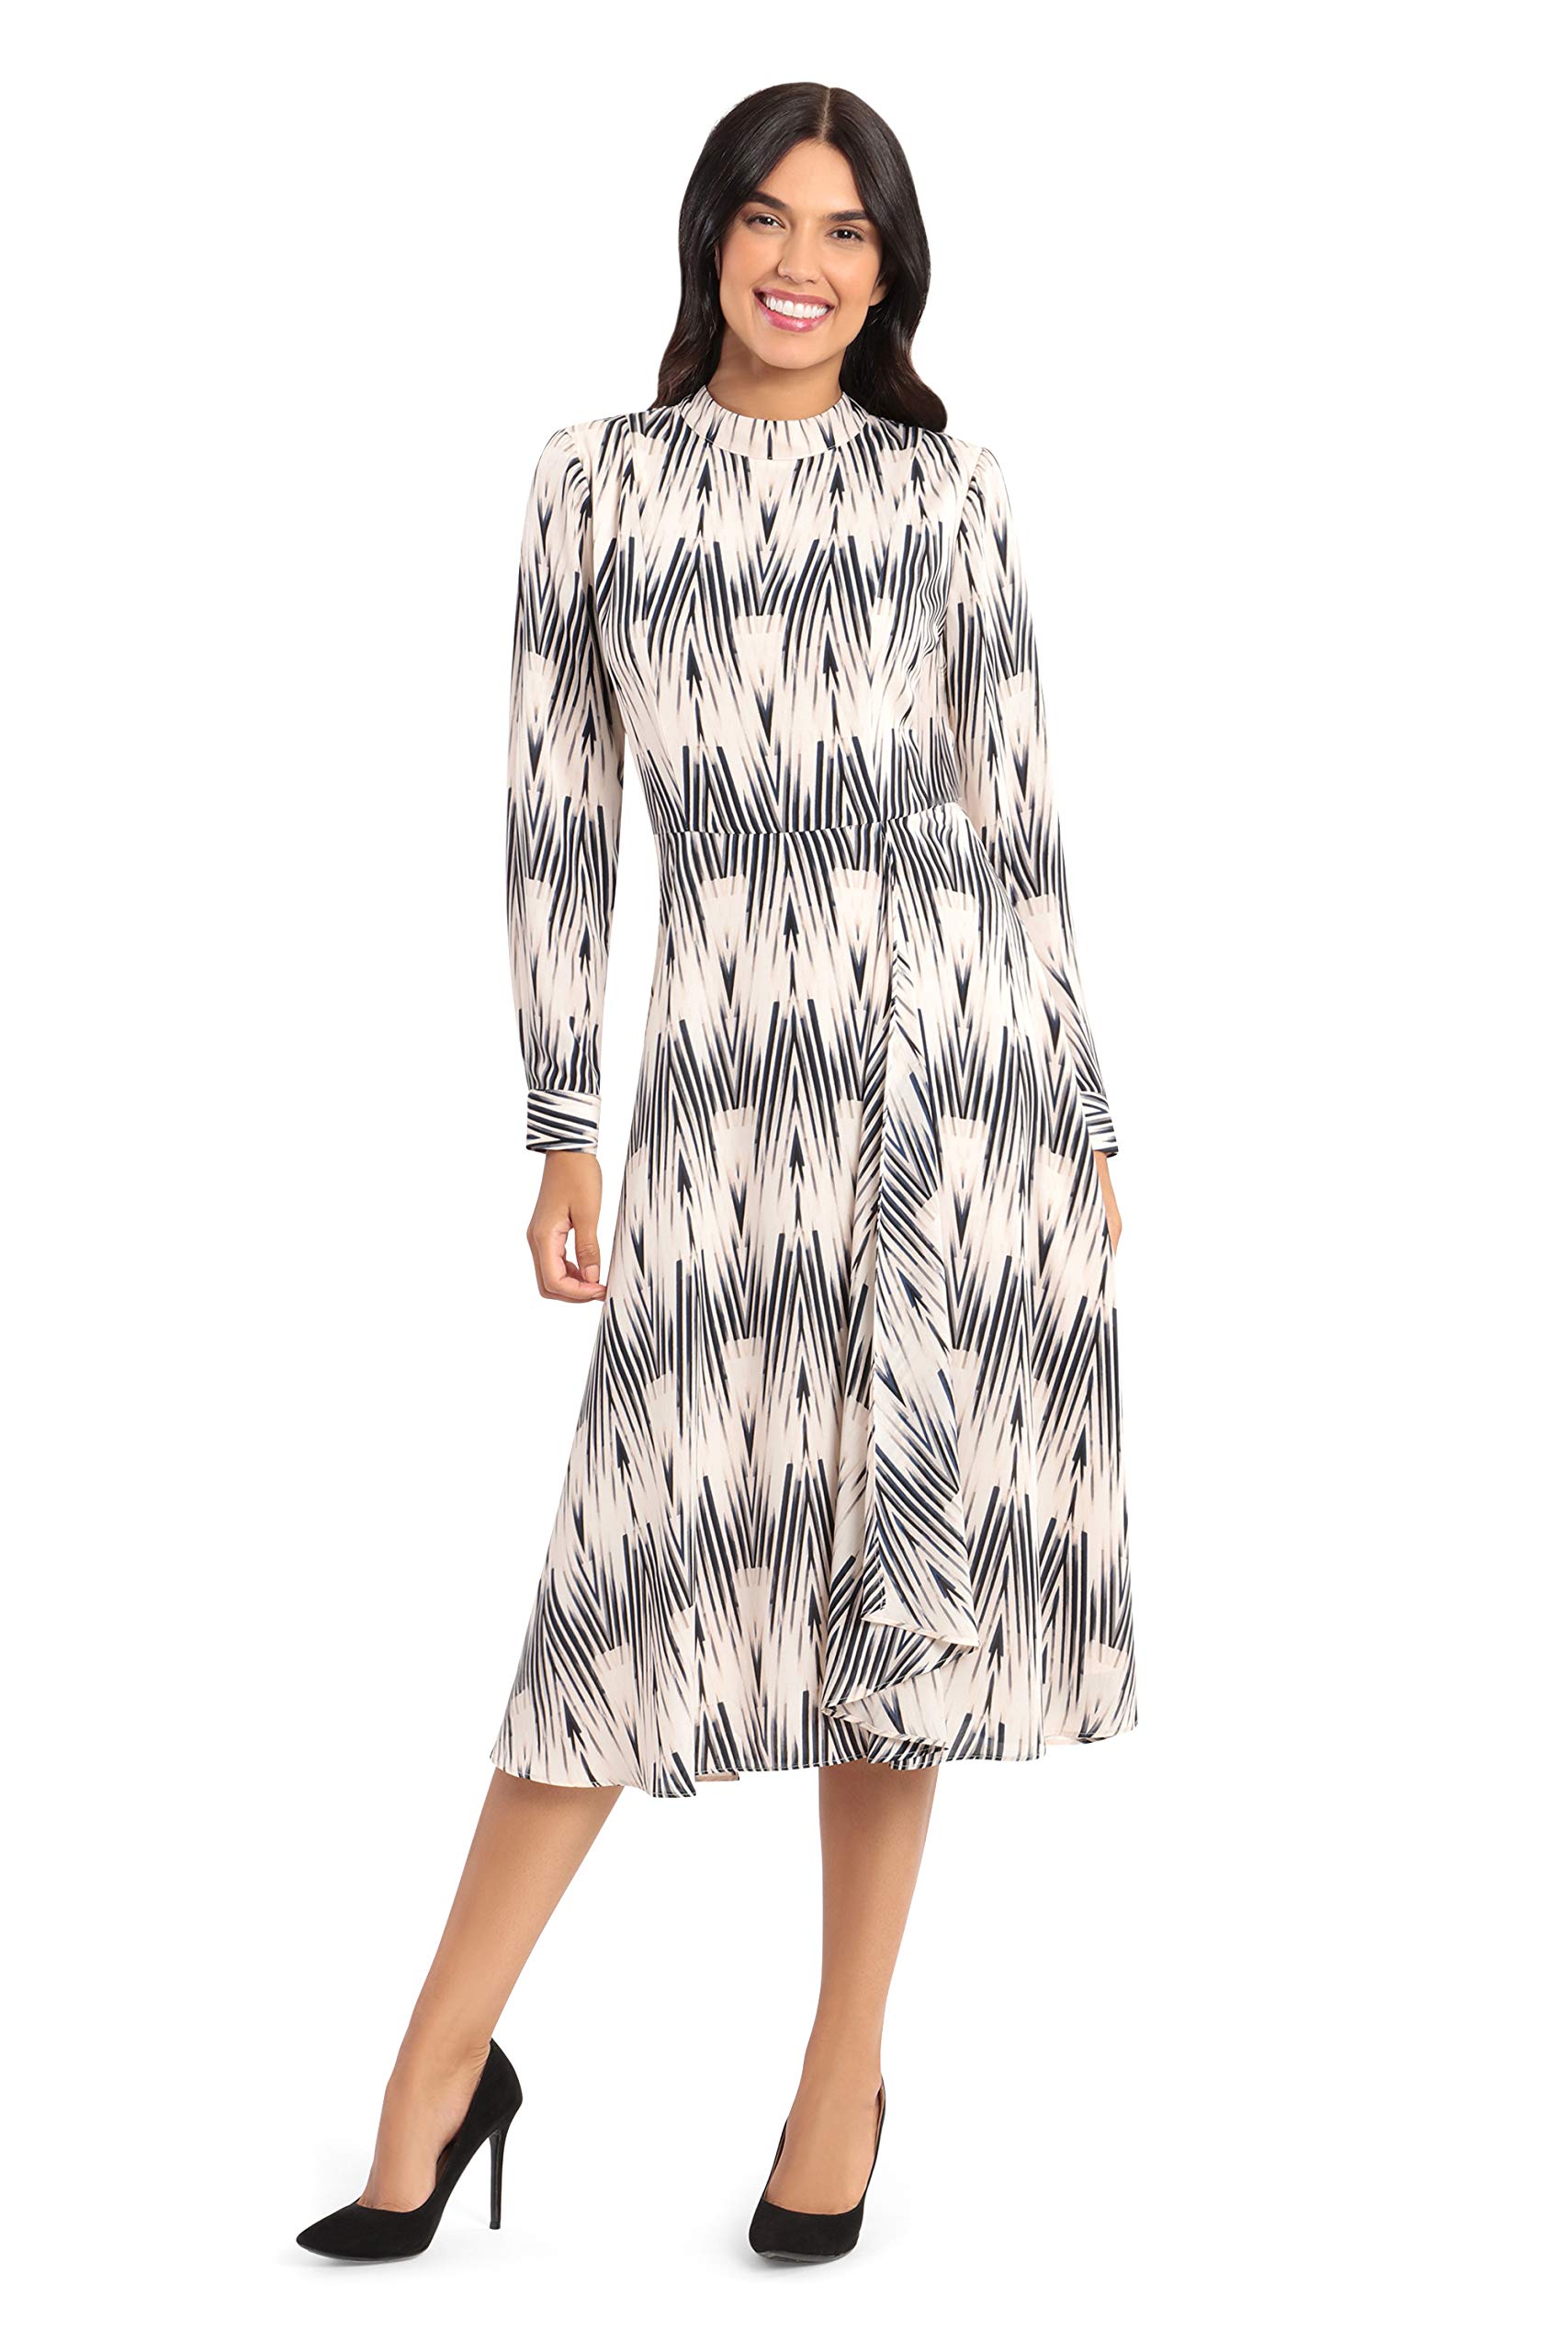 Maggy London Women's Printed Abstract Chevron Cuff Long Sleeve Collar Neck Side Cascade Tea Dress